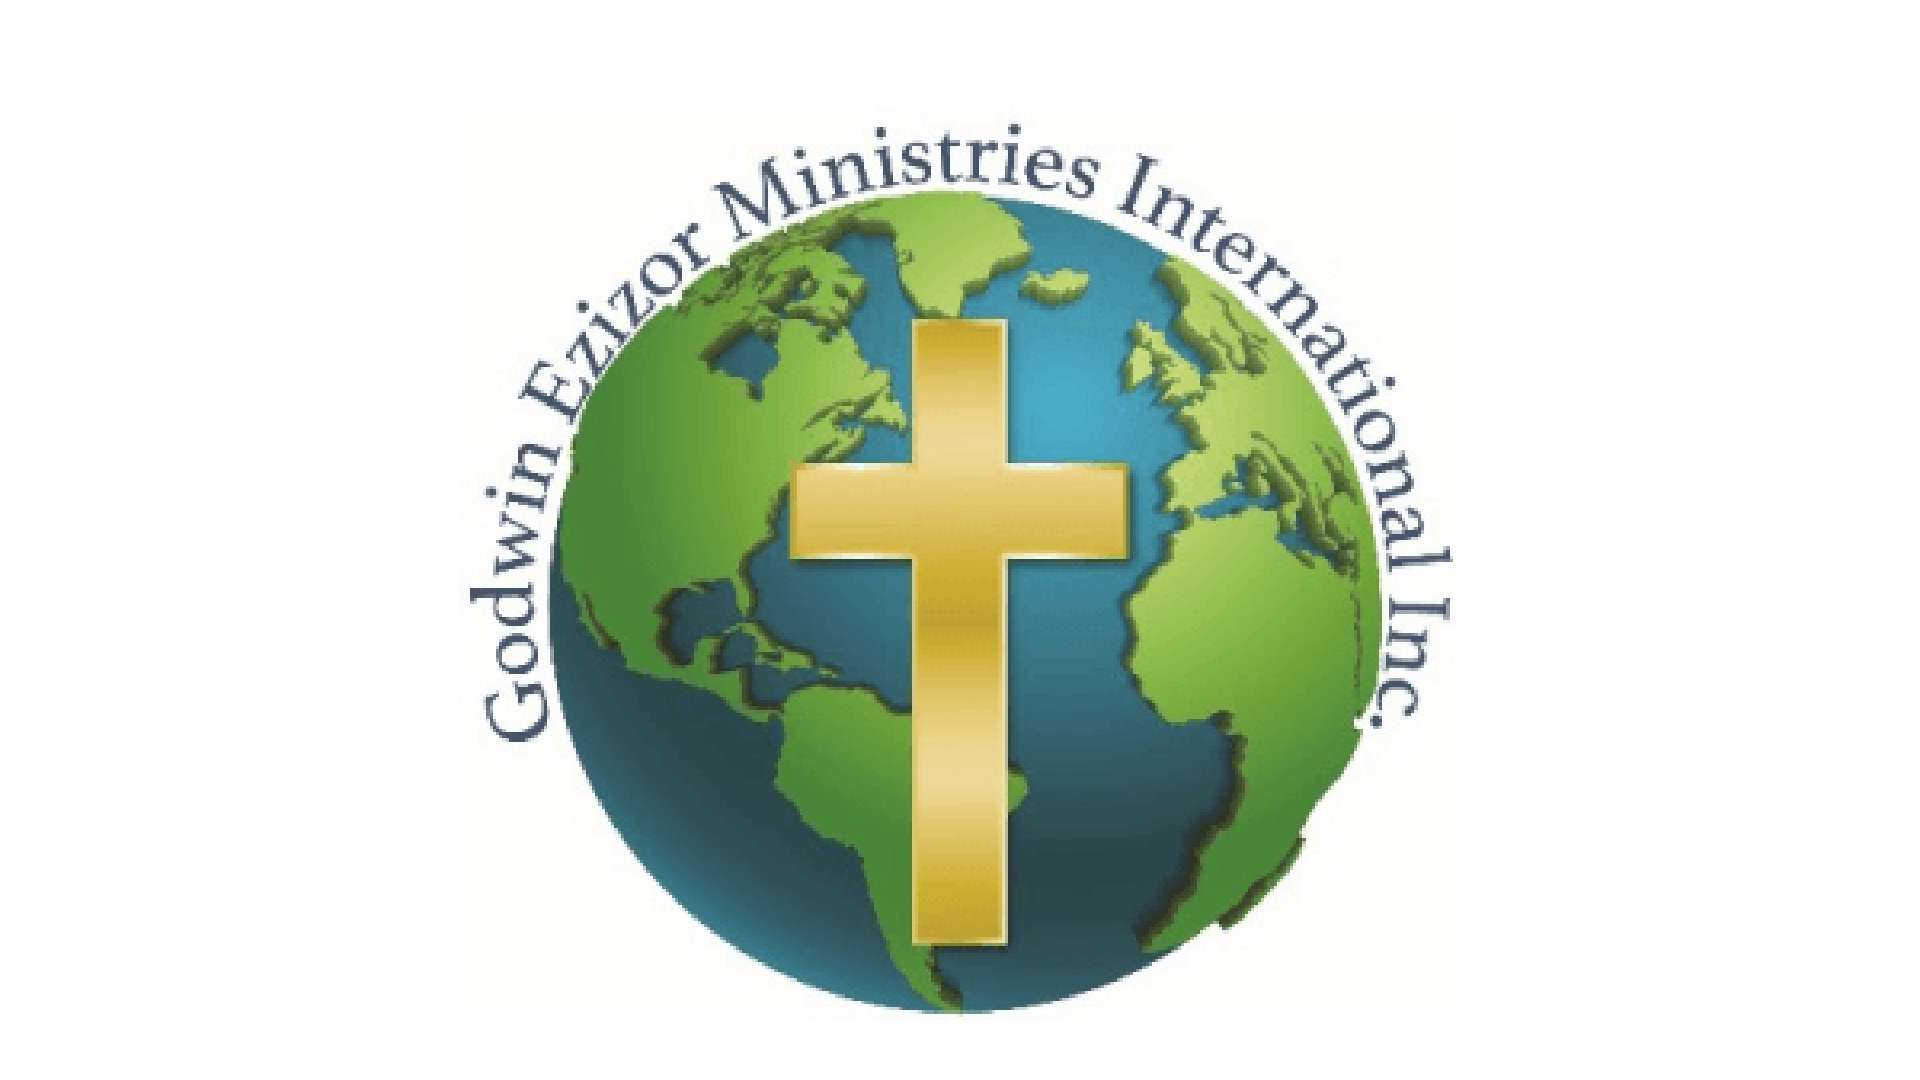 Godwin Ezizor Ministries International logo